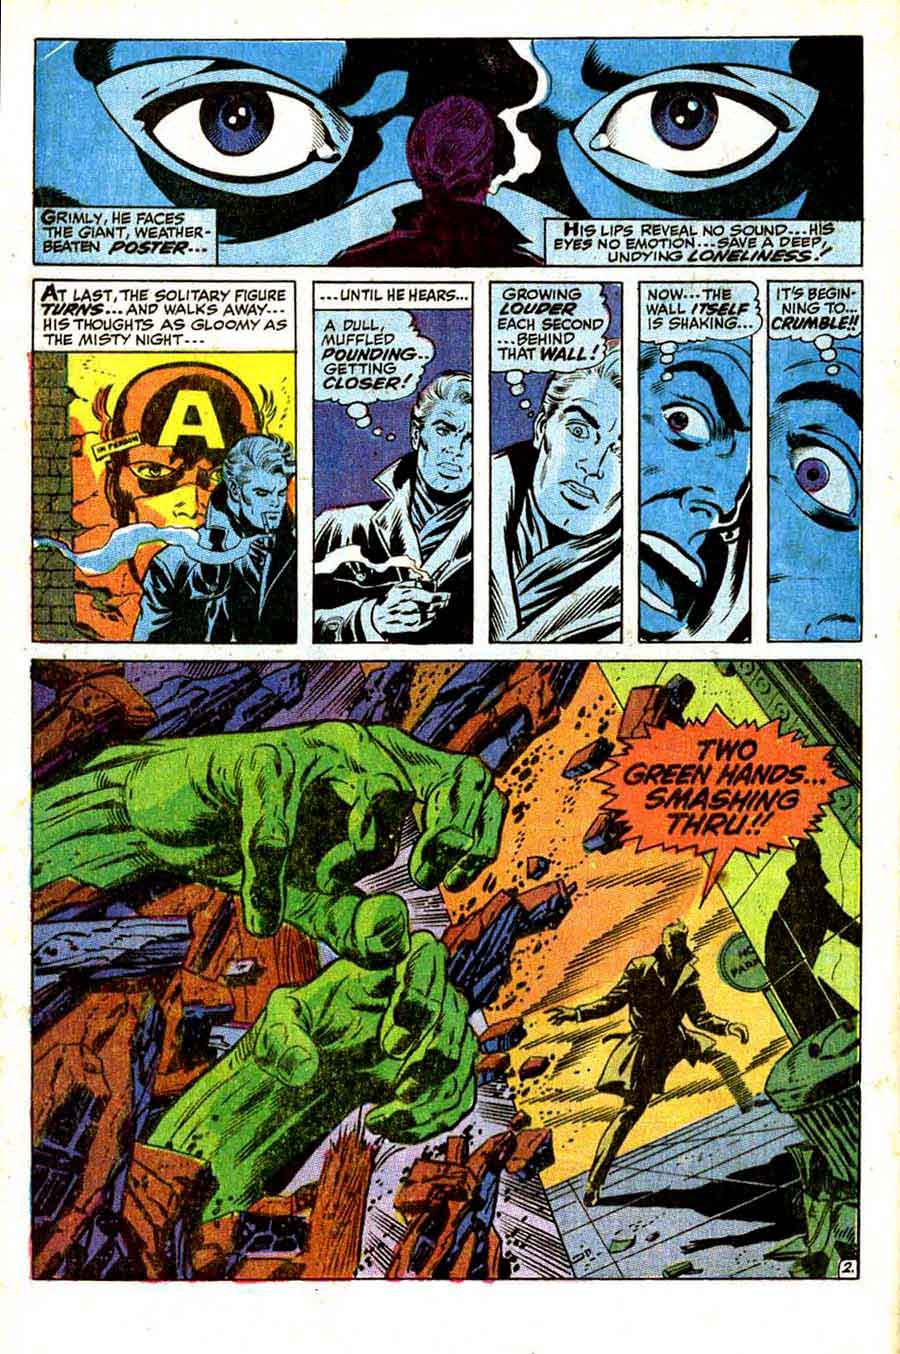 Captain America #110 silver age 1960s marvel comic book page art by Jim Steranko